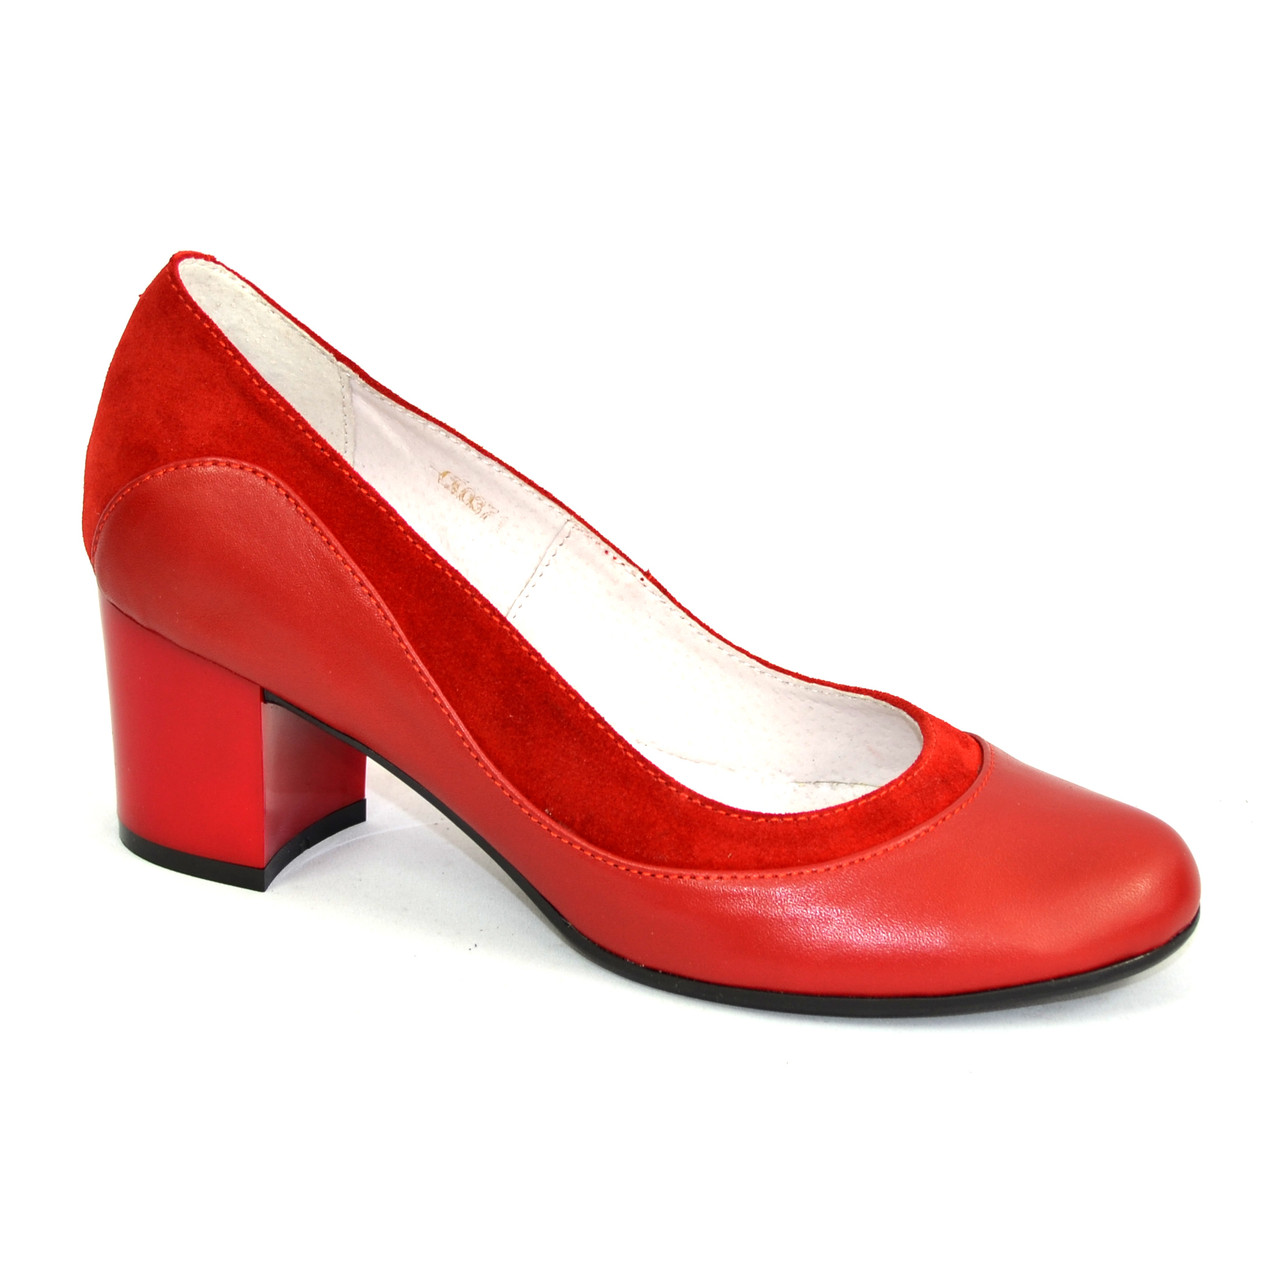 Вайлдберриз женские кож туфли. Туфли женские красные. Красные туфли на невысоком каблуке. Женские туфли на низком каблуке из натуральной кожи красные. Туфли женские на низком каблуке.